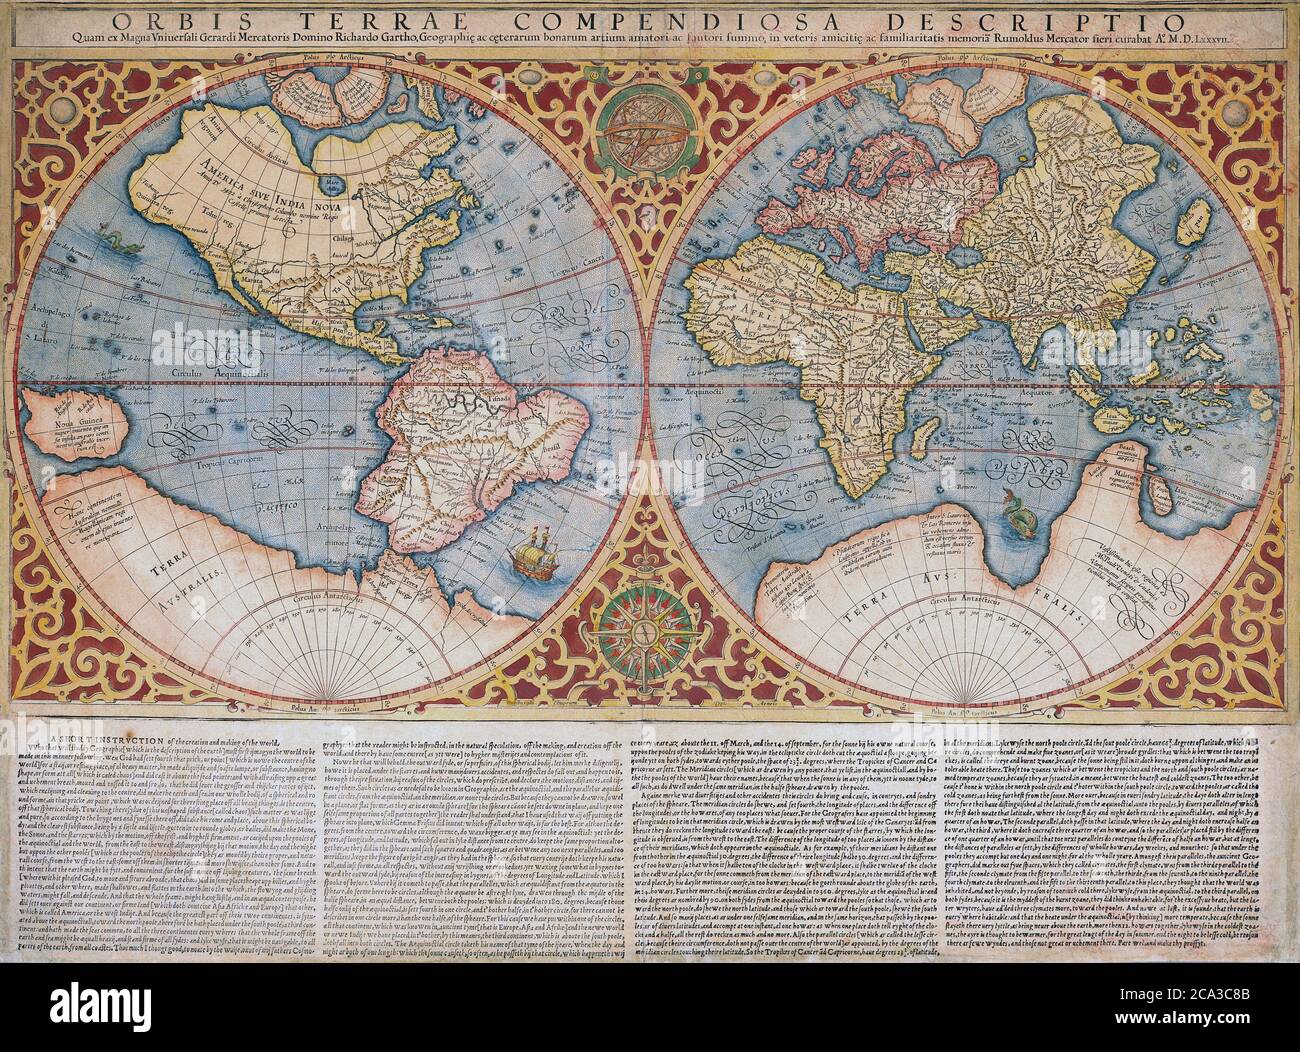 Map of the world by Gerard Mercator, first published circa 1595. Orbis terrae compendiosa descriptio. Stock Photo